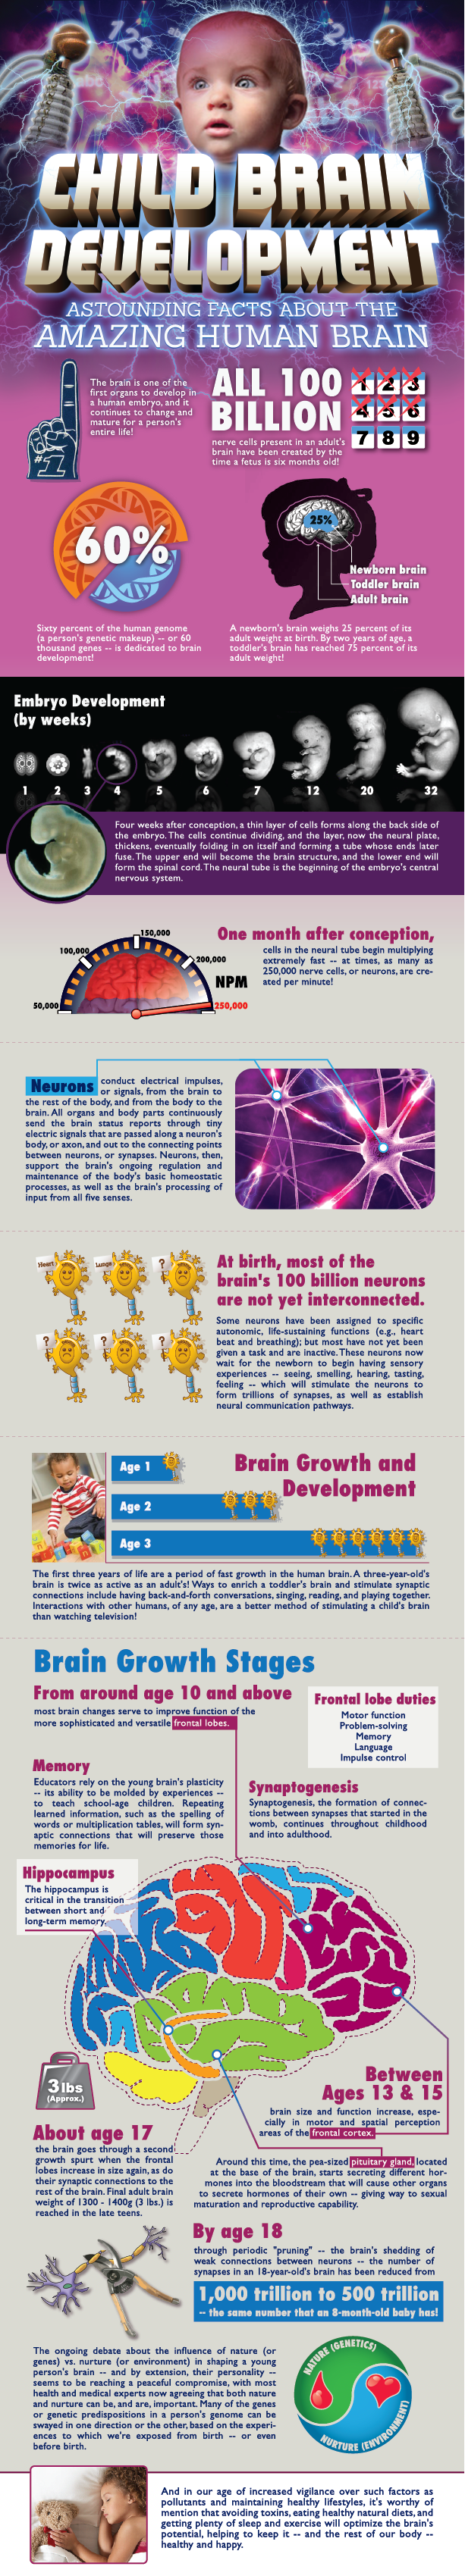 Child Brain Development